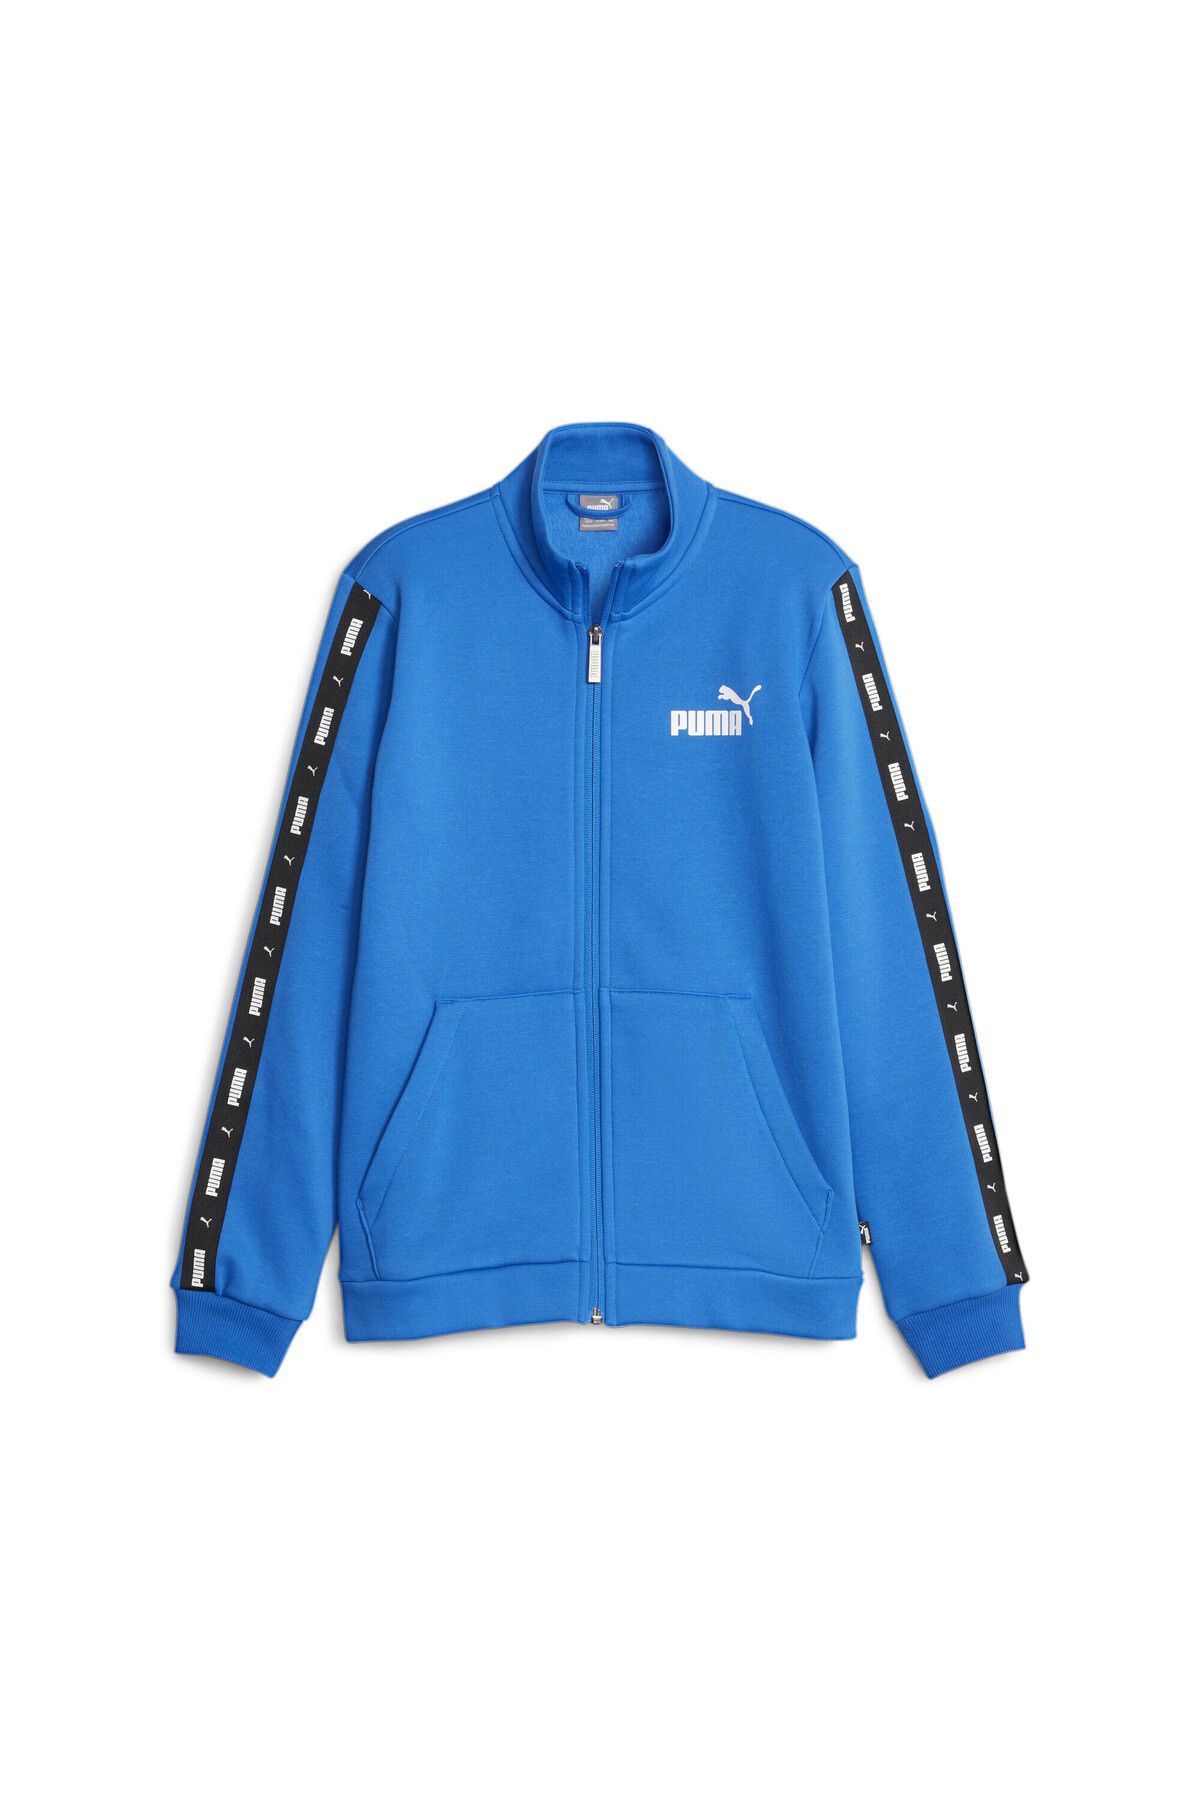 Puma Trainingsanzug - Blau Regular Trendyol - - Fit